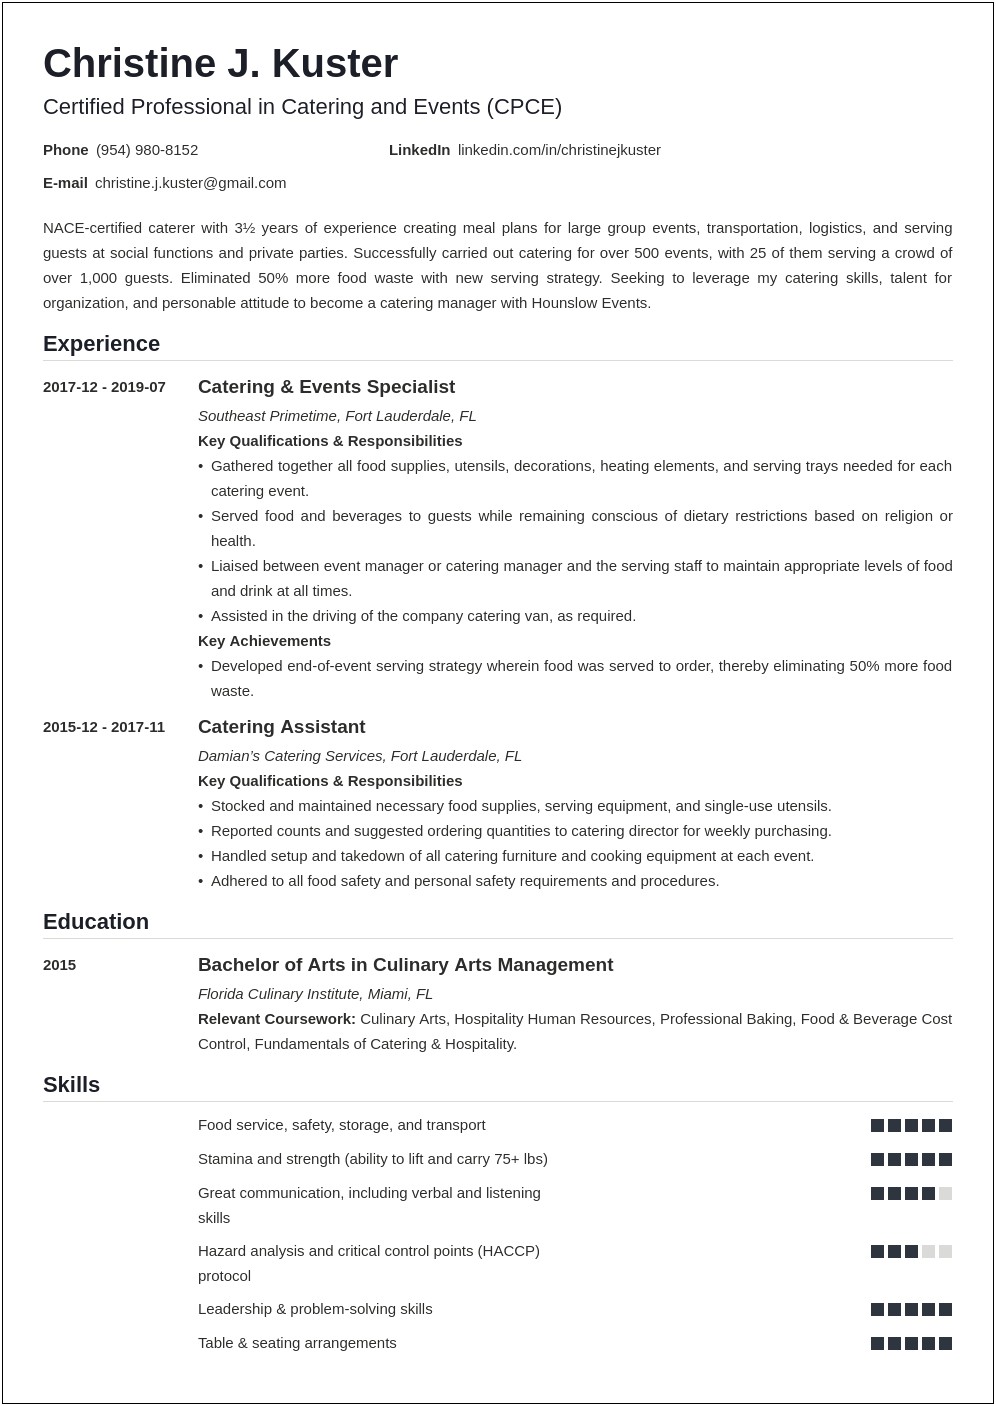 Catering Job In Hospital Description Resume